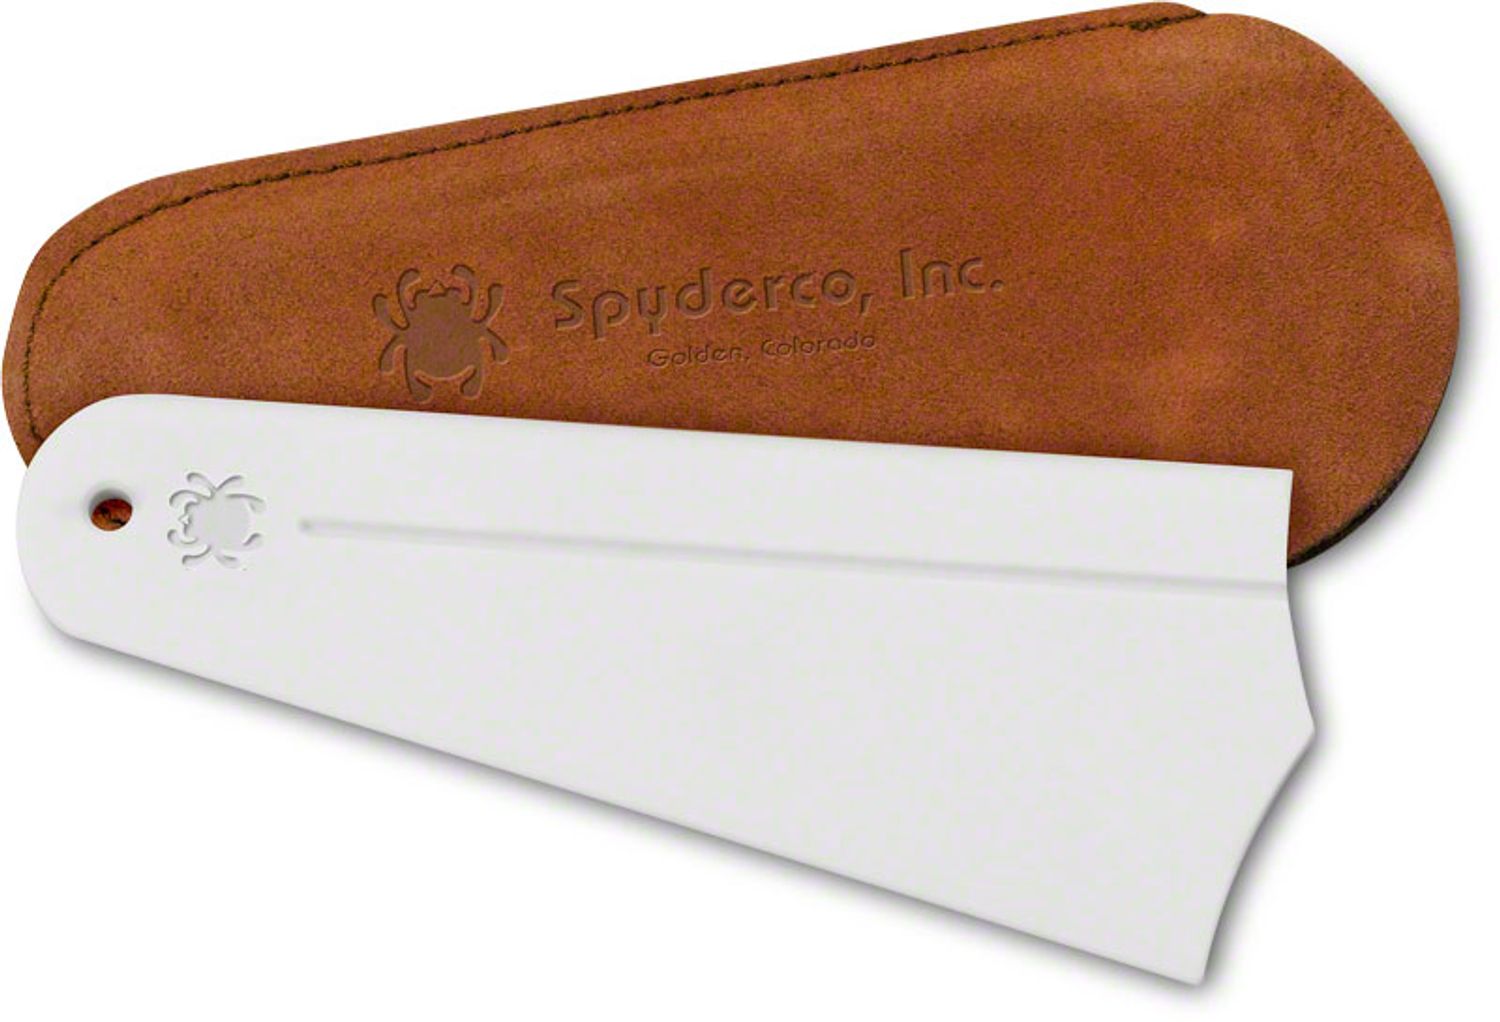 Sharpeners - Spyderco, Inc.